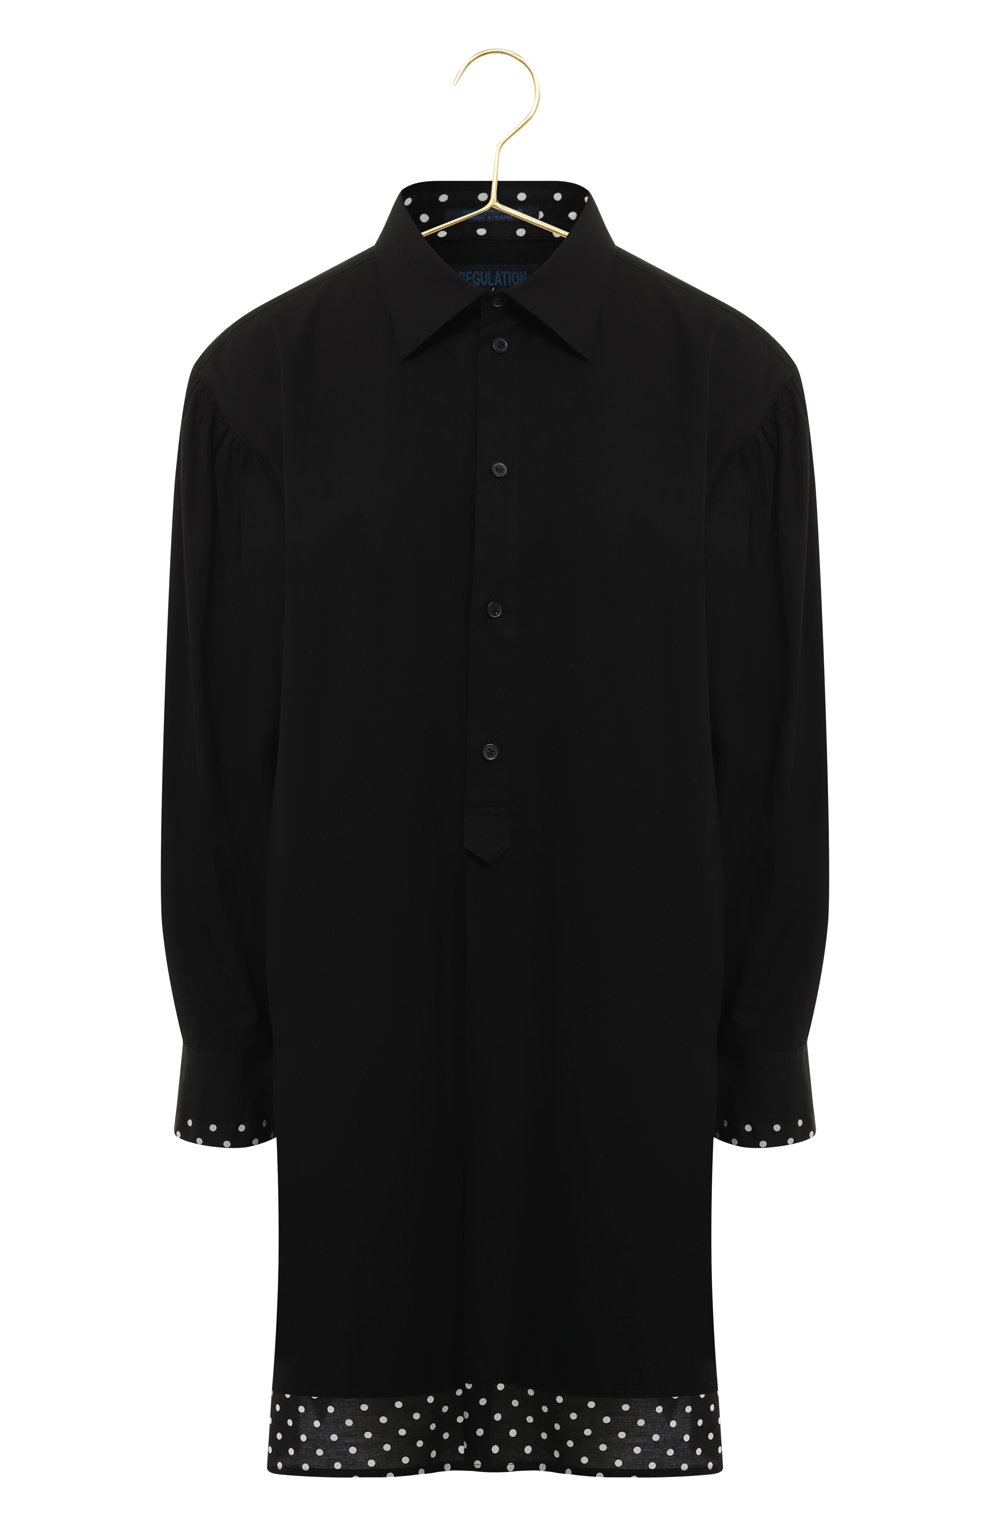 Хлопковая блузка | Yohji Yamamoto | Чёрный - 1